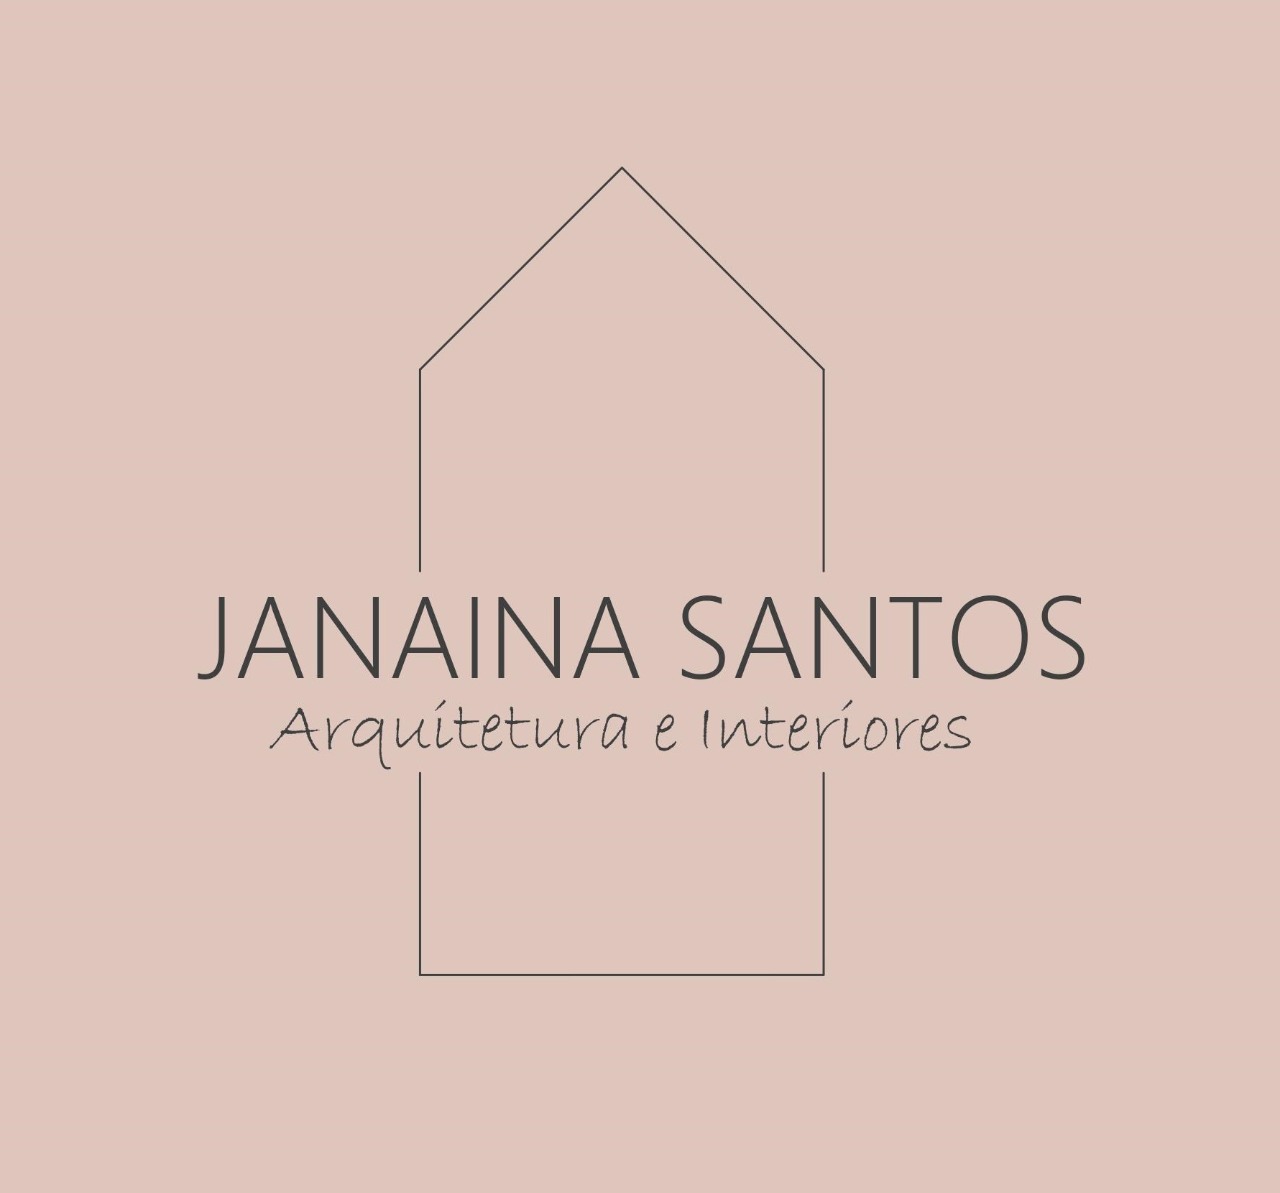 JANAINA SANTOS

Arquitetura e linterioves